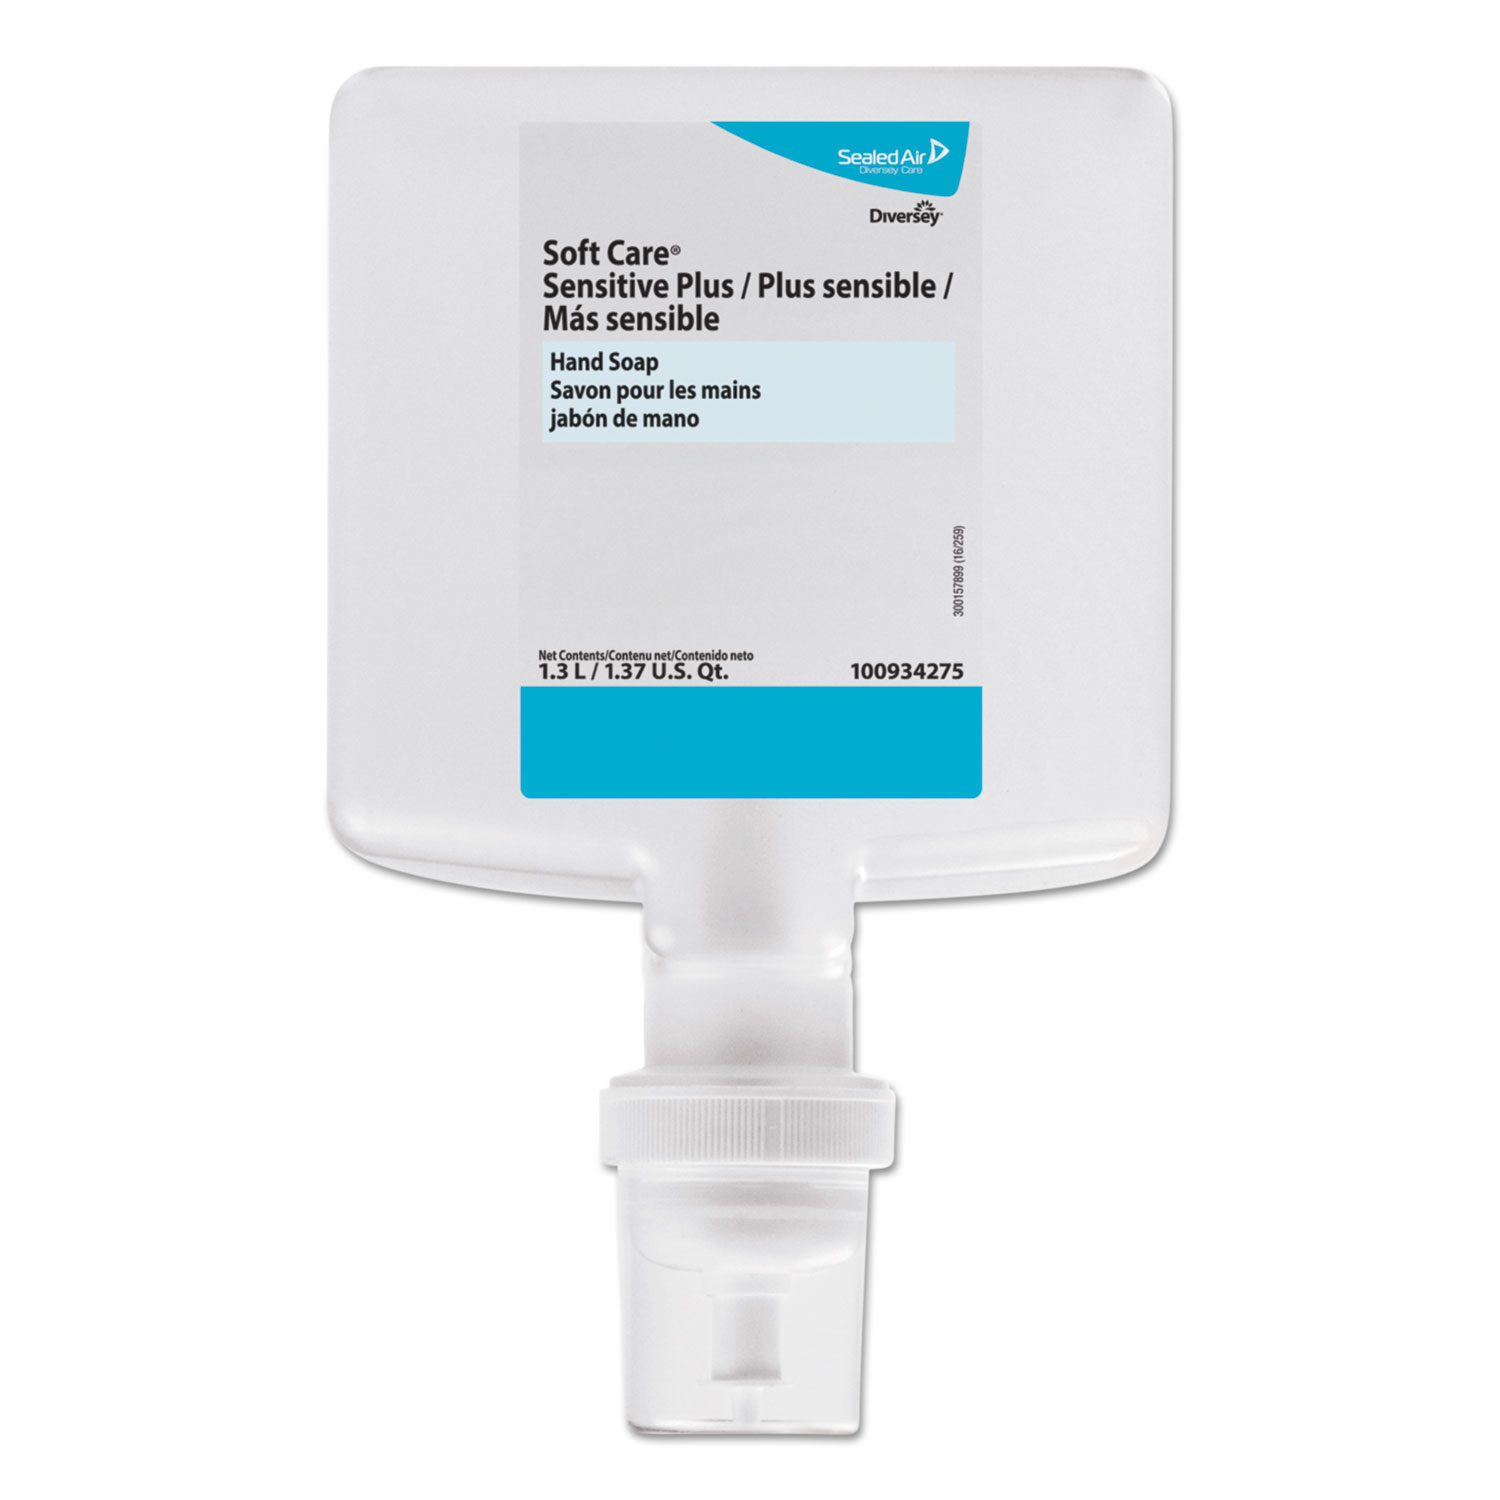  Diversey 100934275 Soft Care Sensitive Plus Hand Soap, 1.3 L Cartridge, 6/Carton (DVO100934275) 